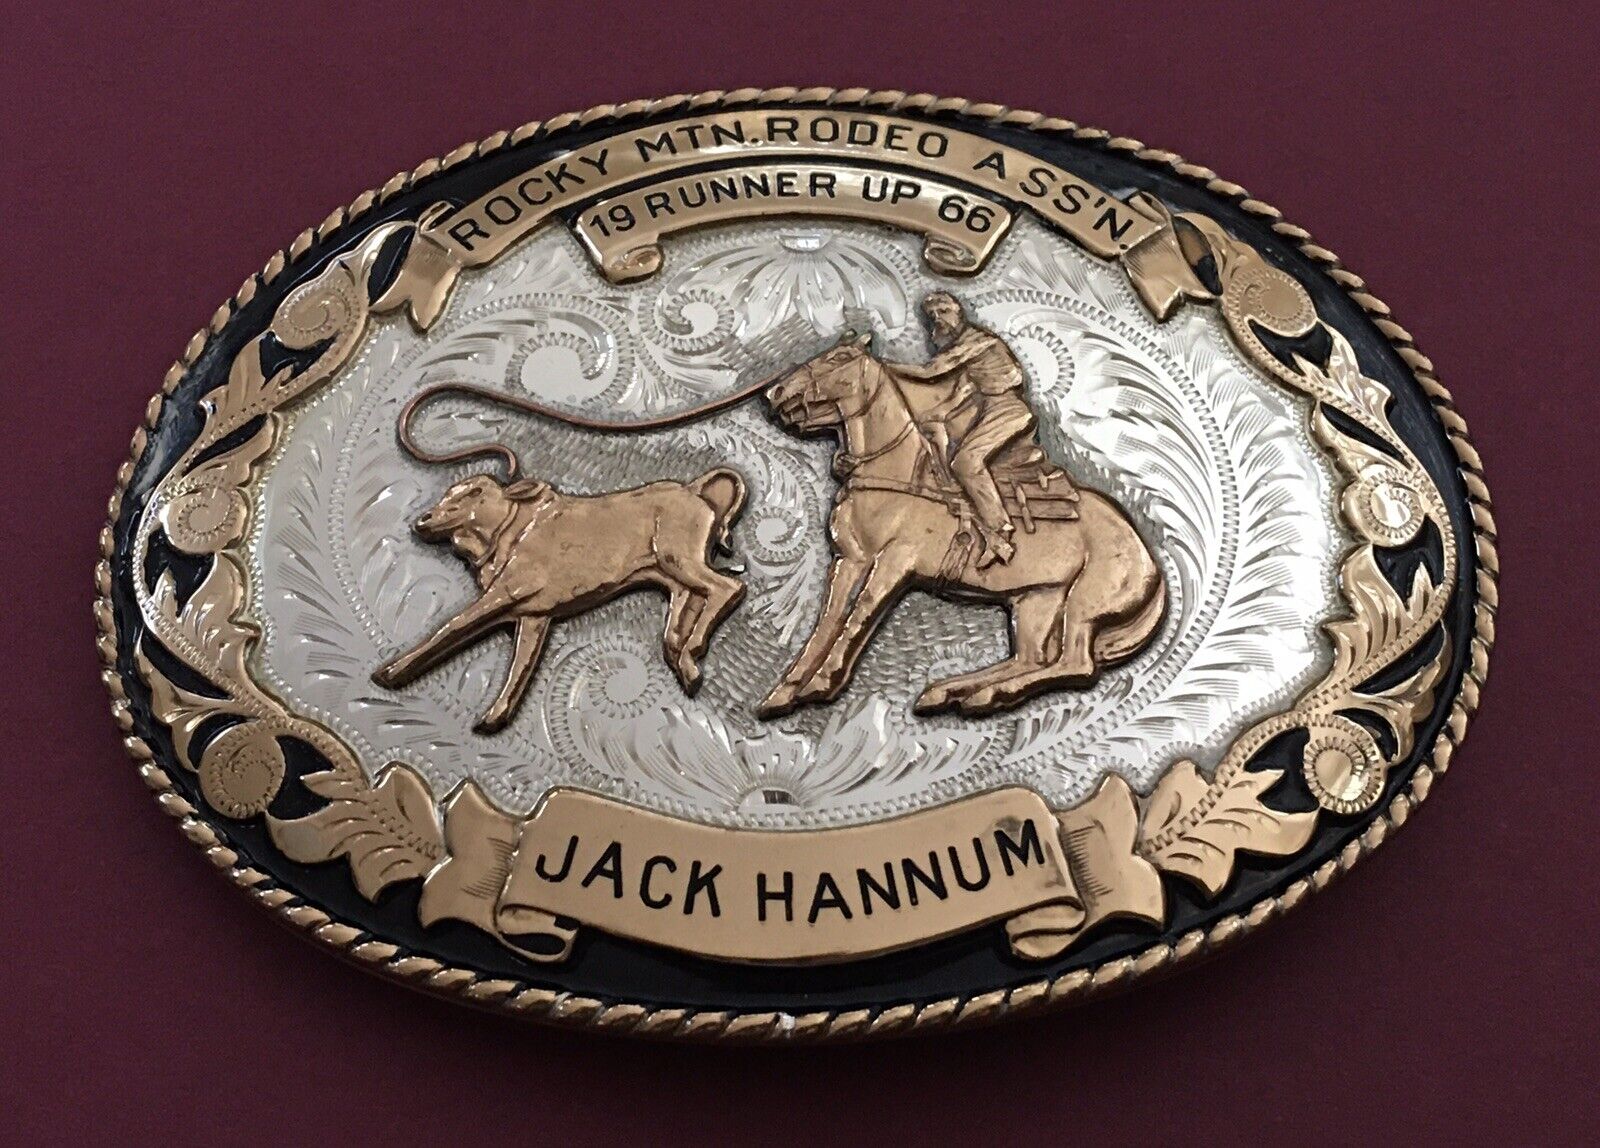 Rare Vintage 1966 Rocky Mtn Rodeo Sterling Silver HOF Cowboy Trophy Belt Buckle